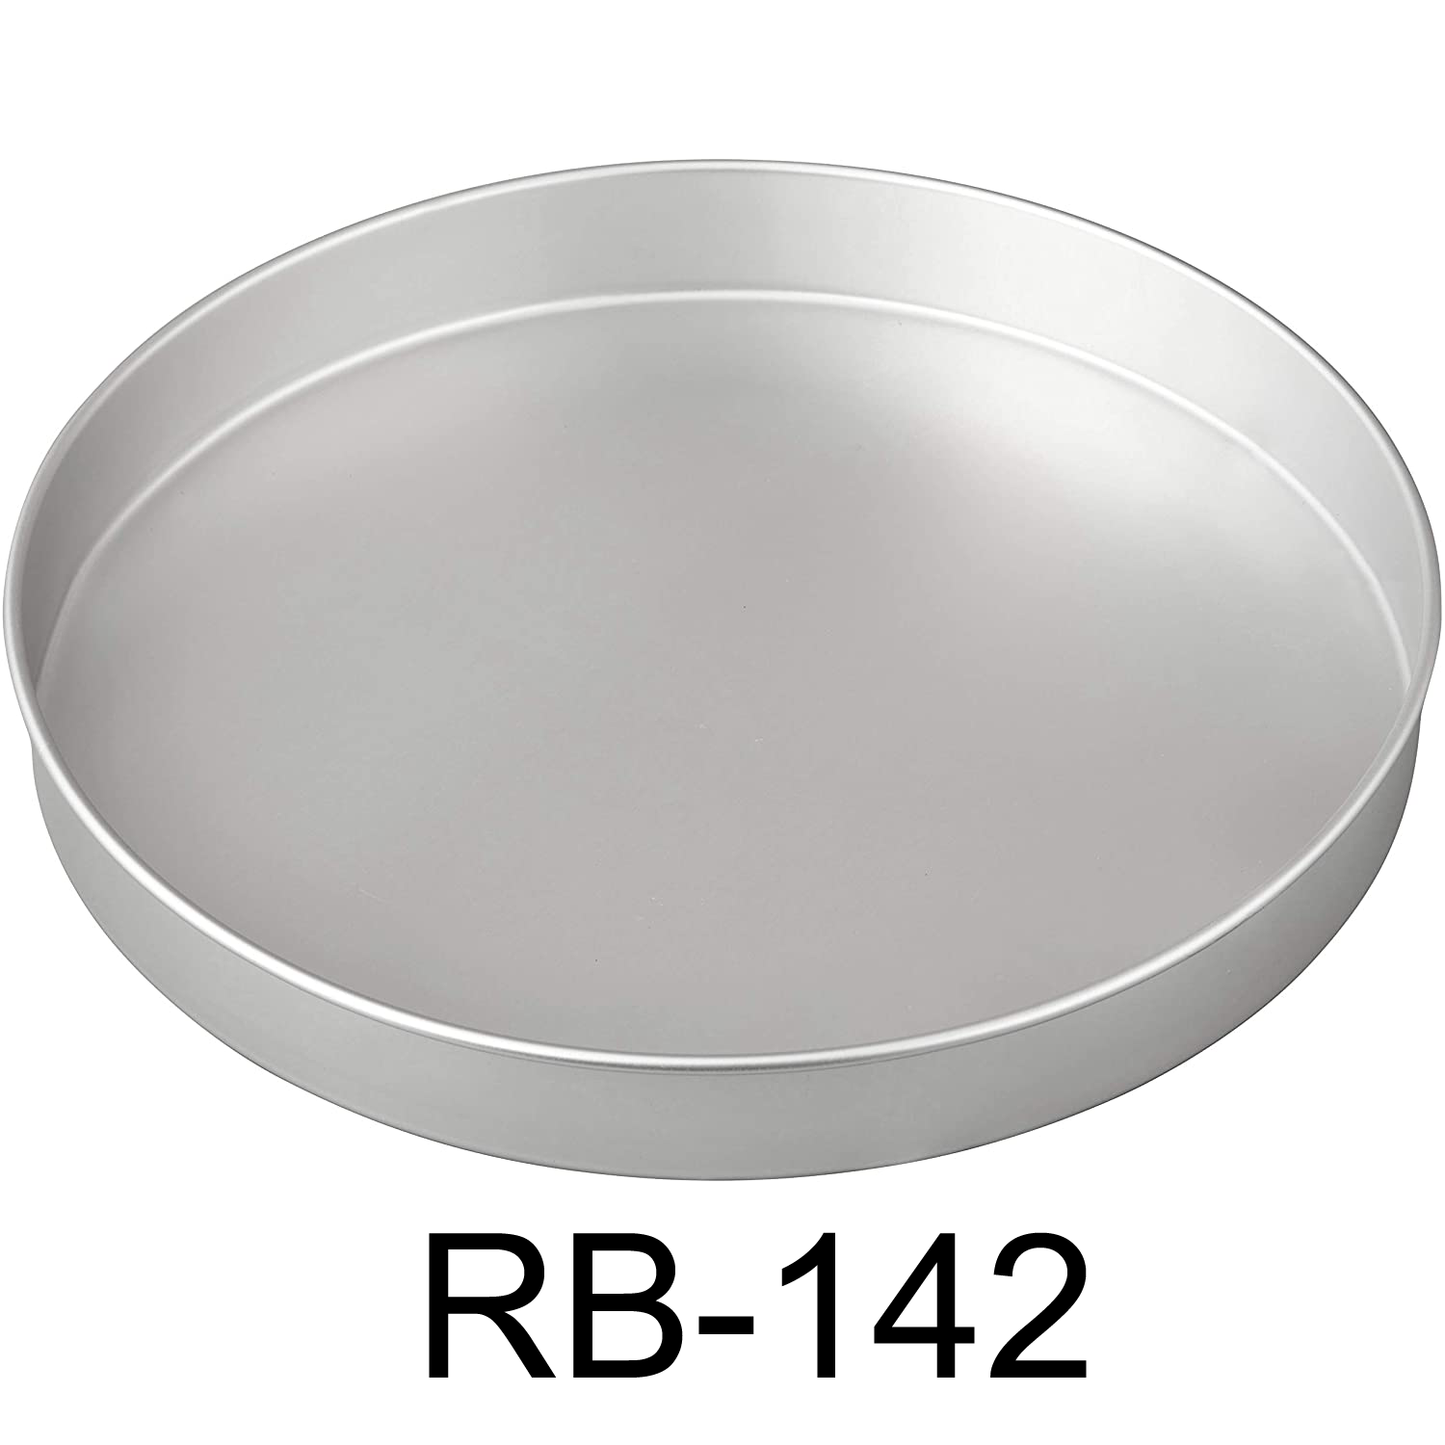 14" Aluminum Round Baking Tray